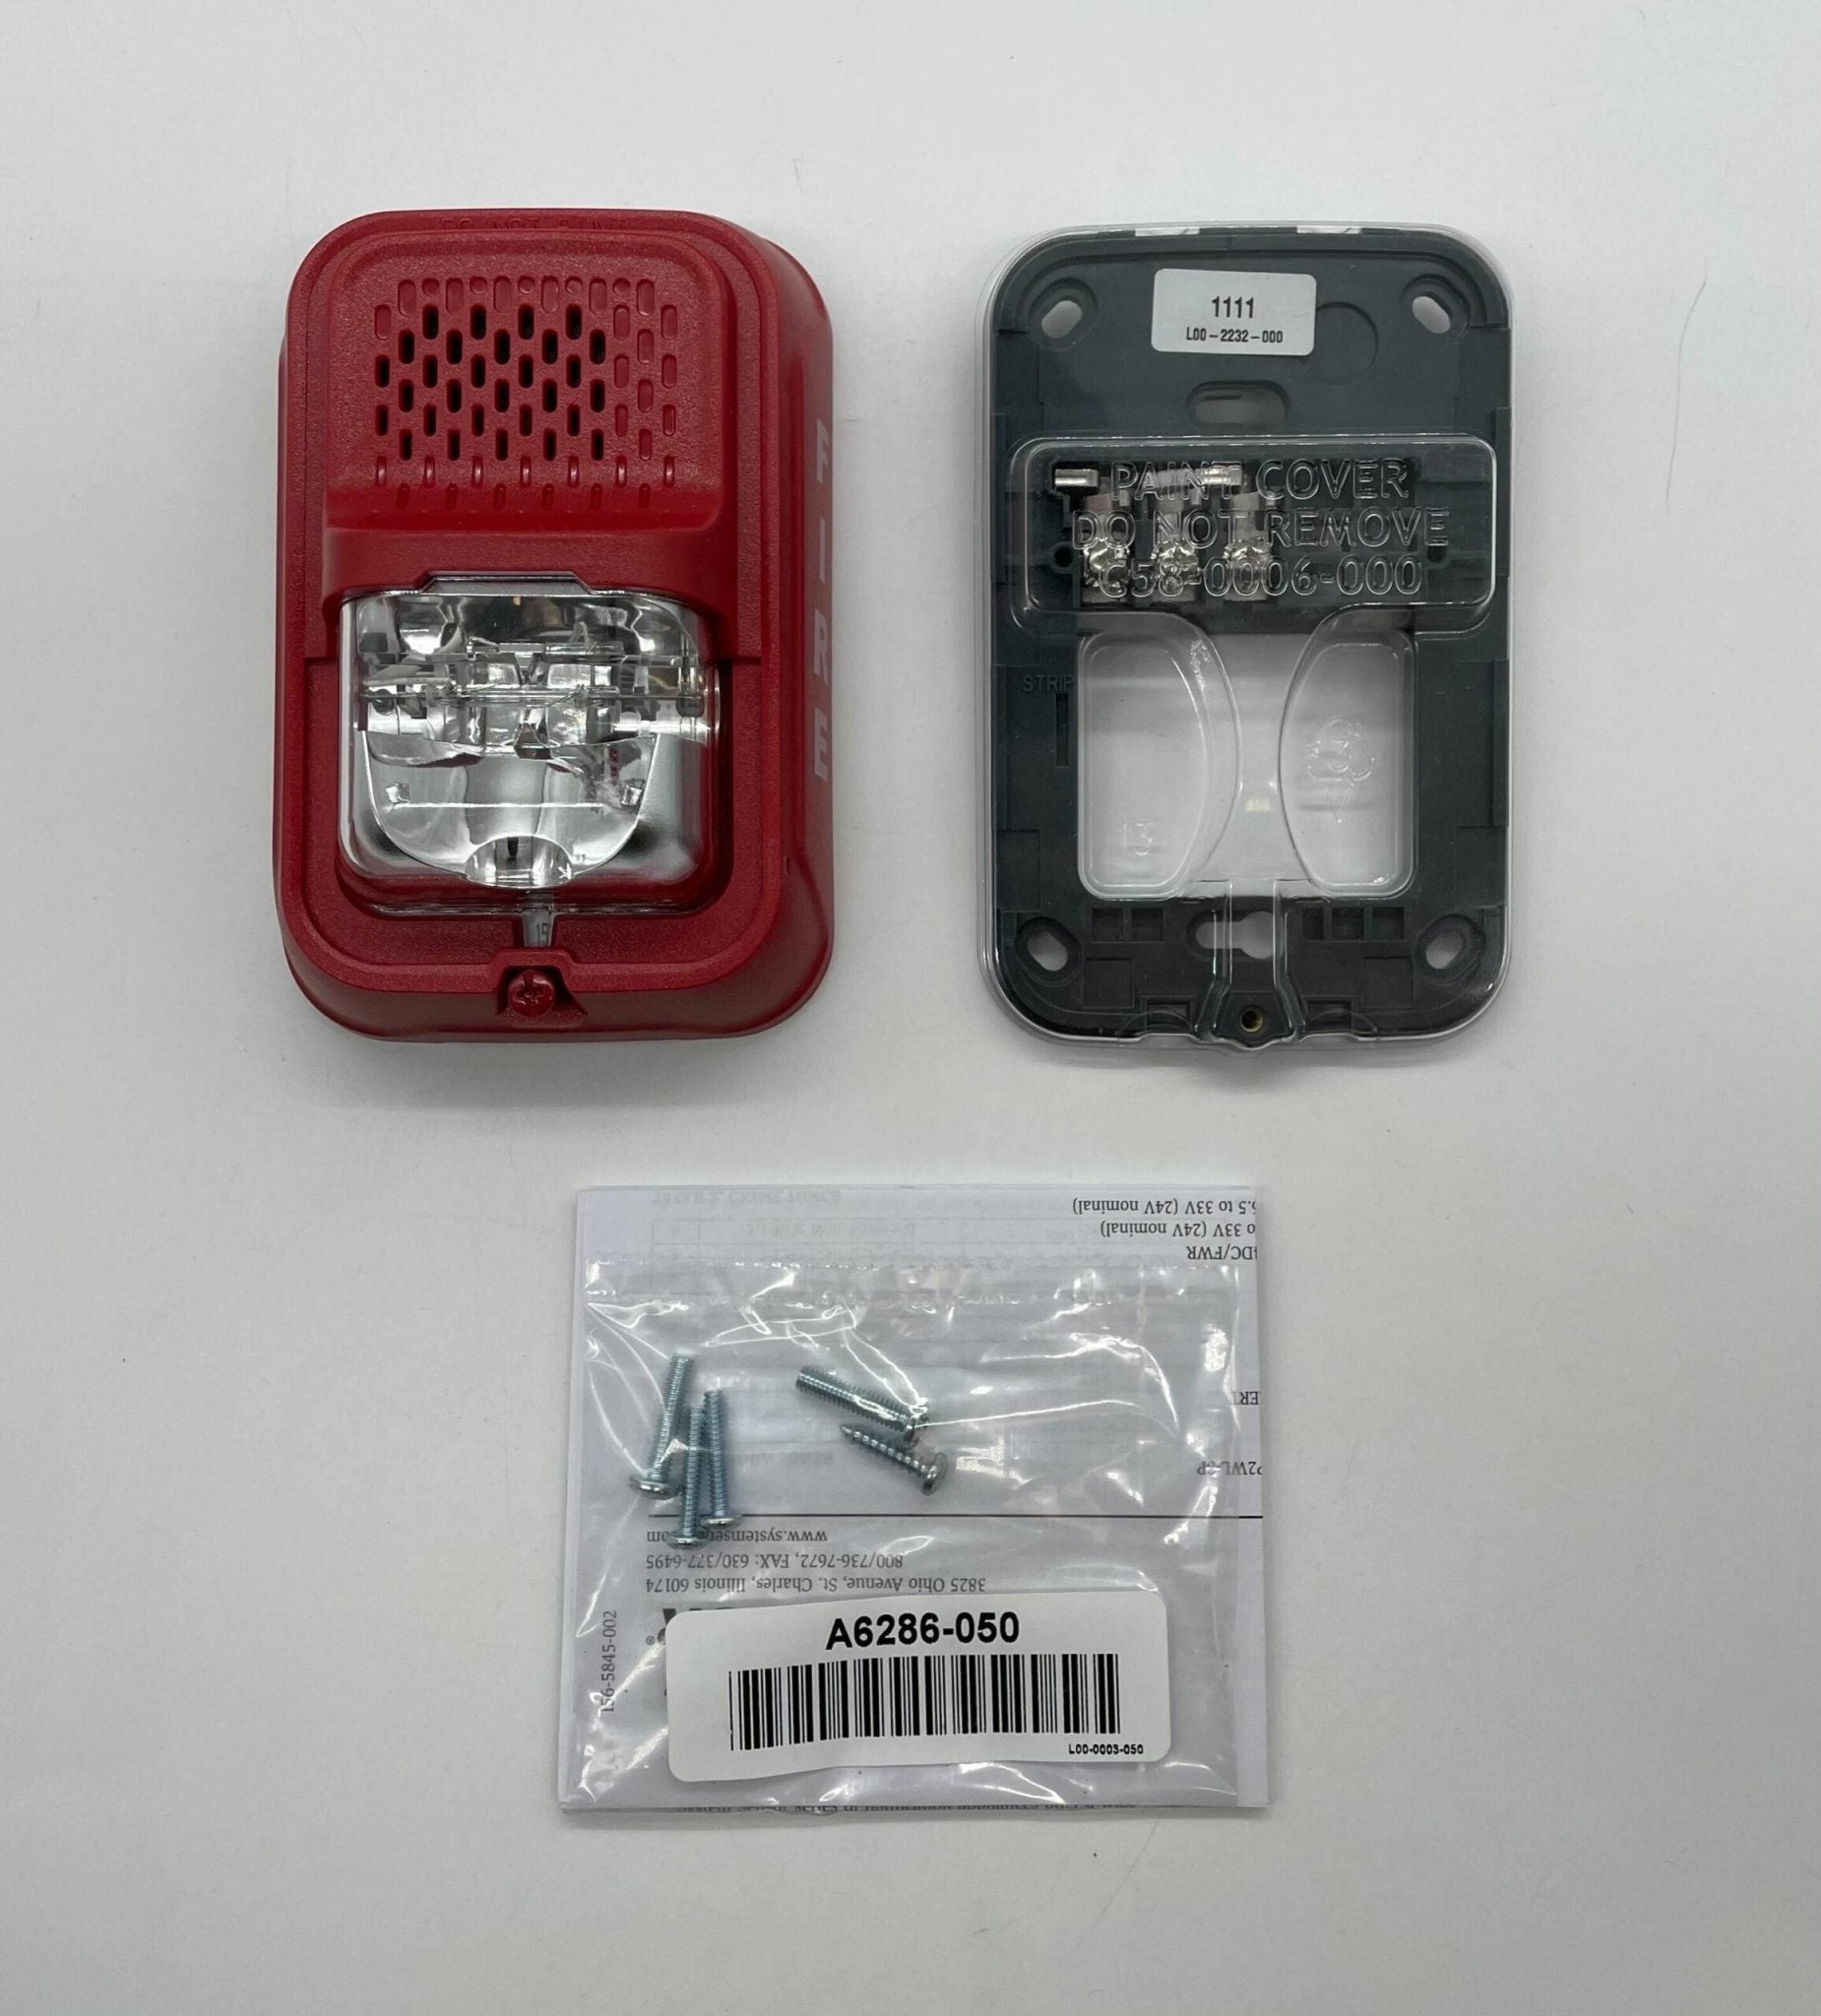 System Sensor P2GRL - The Fire Alarm Supplier